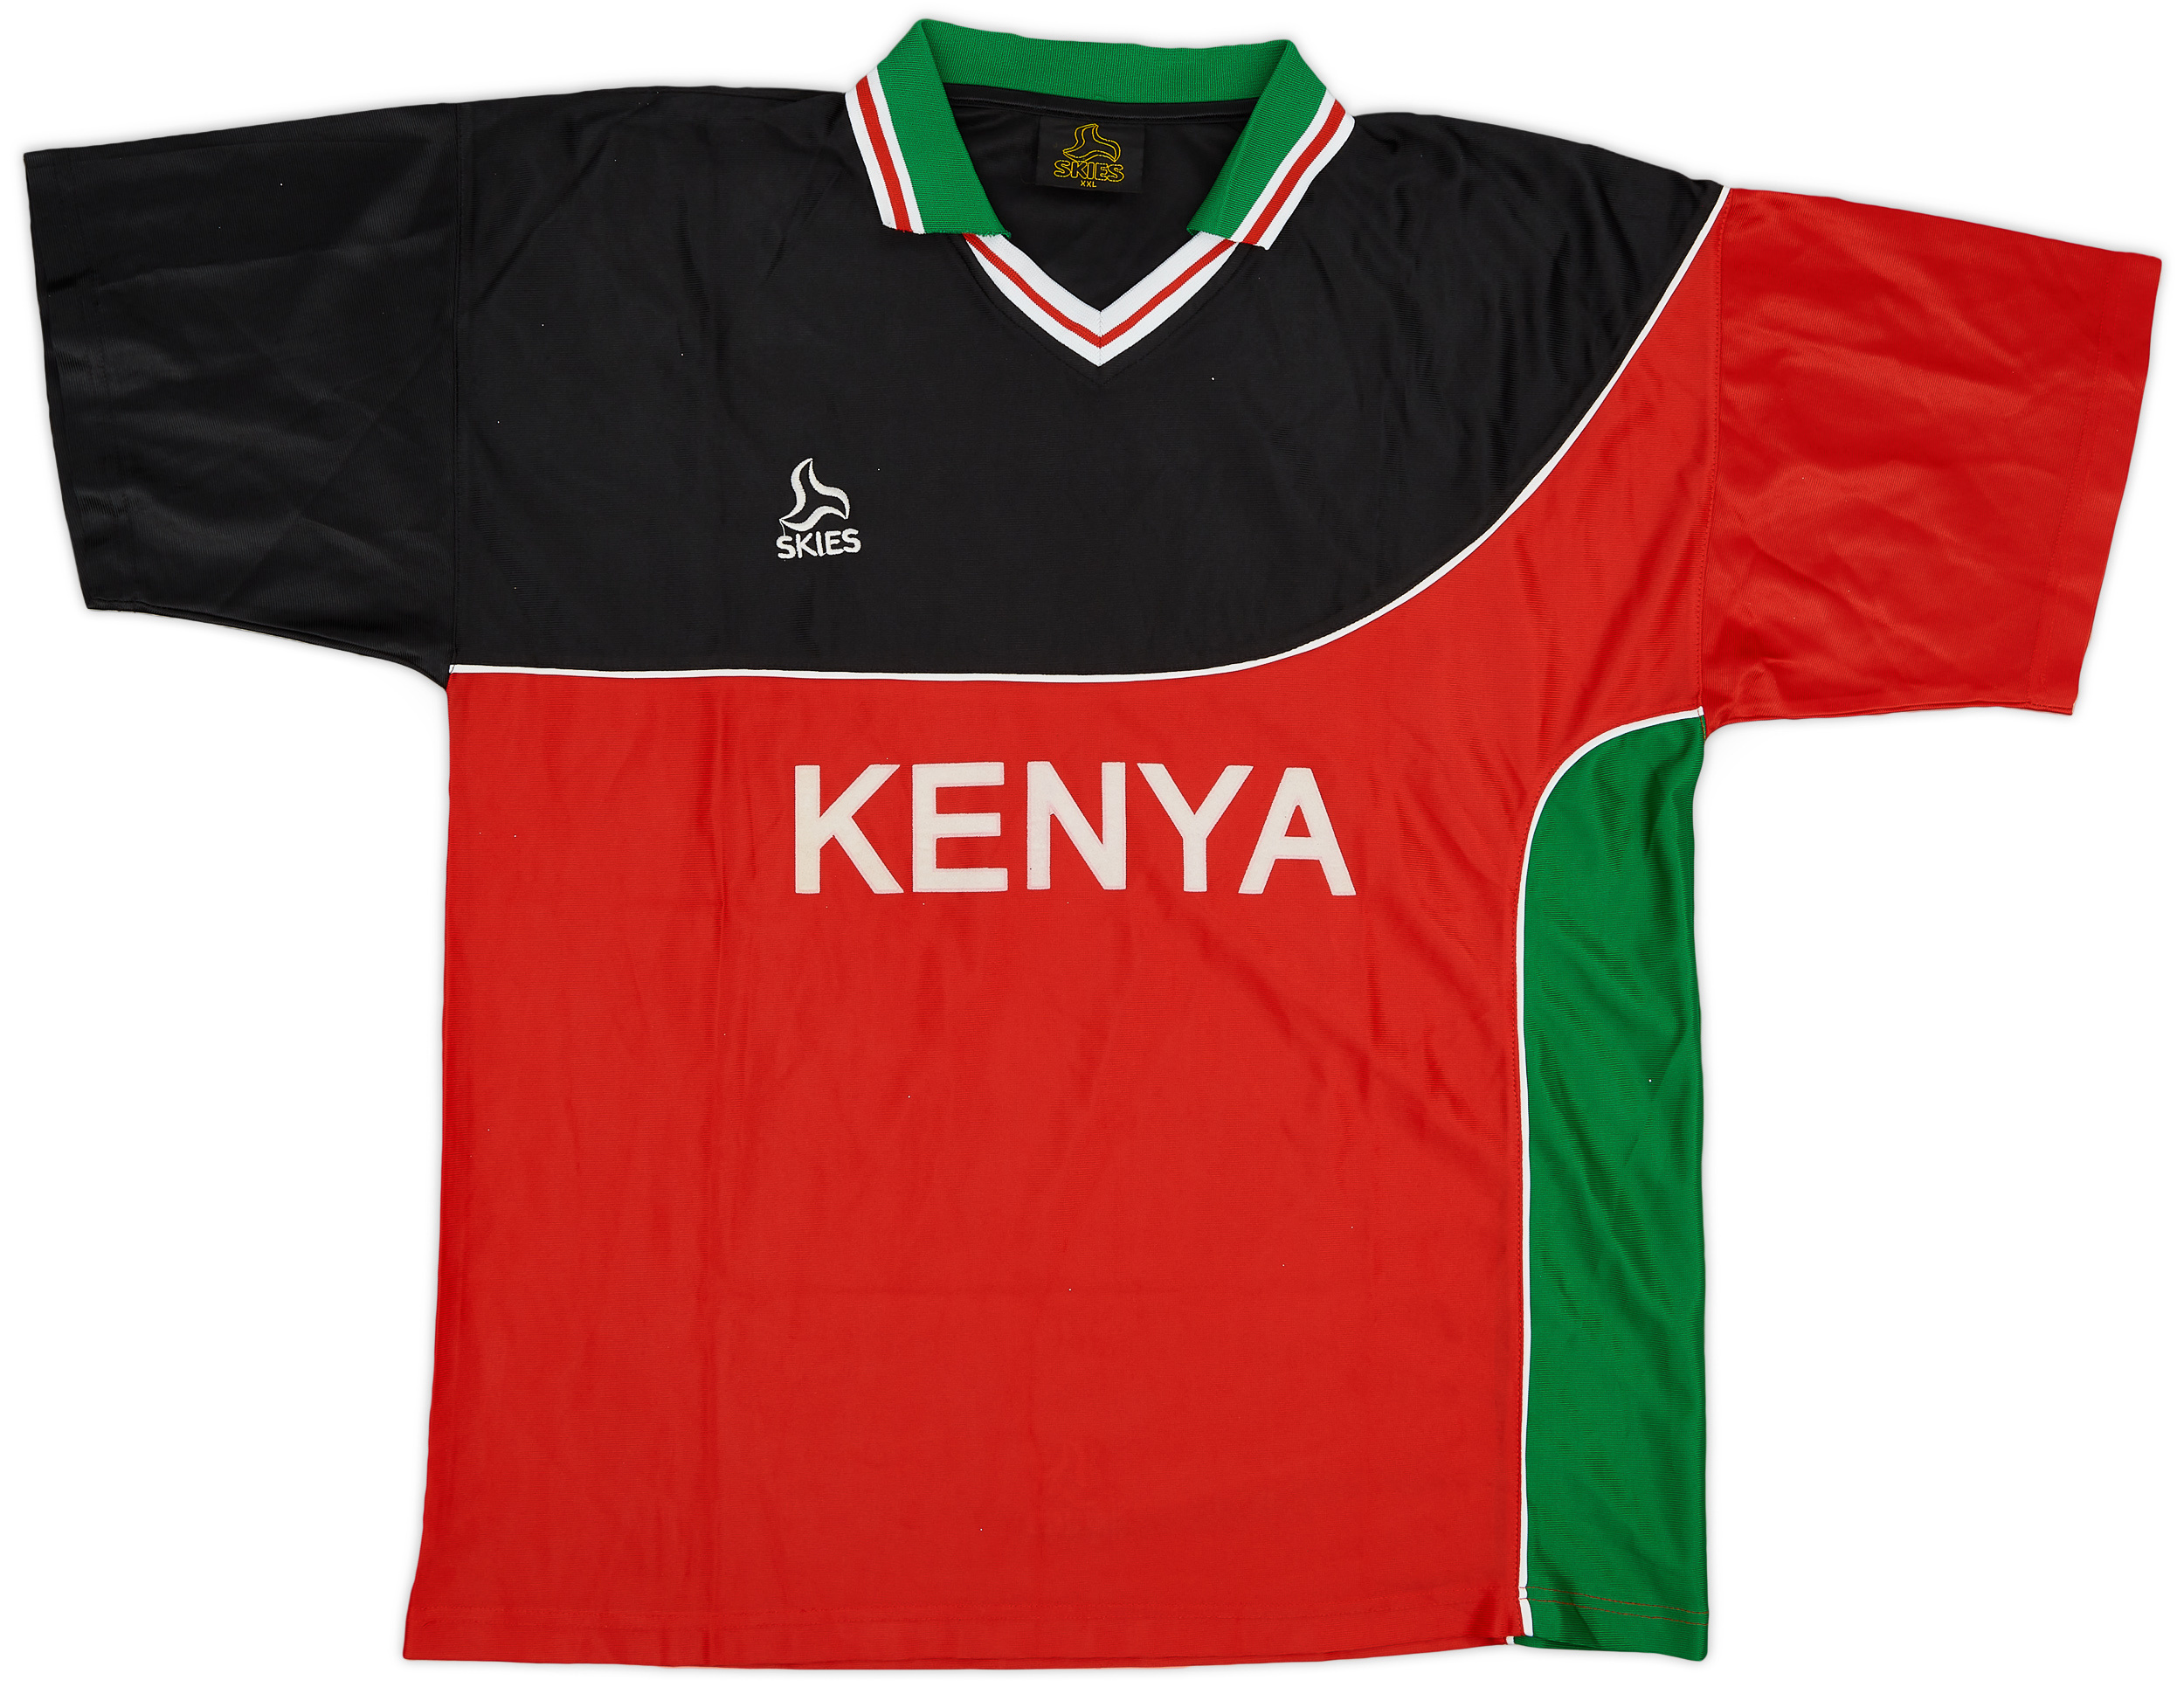 Kenya  Terceira camisa (Original)